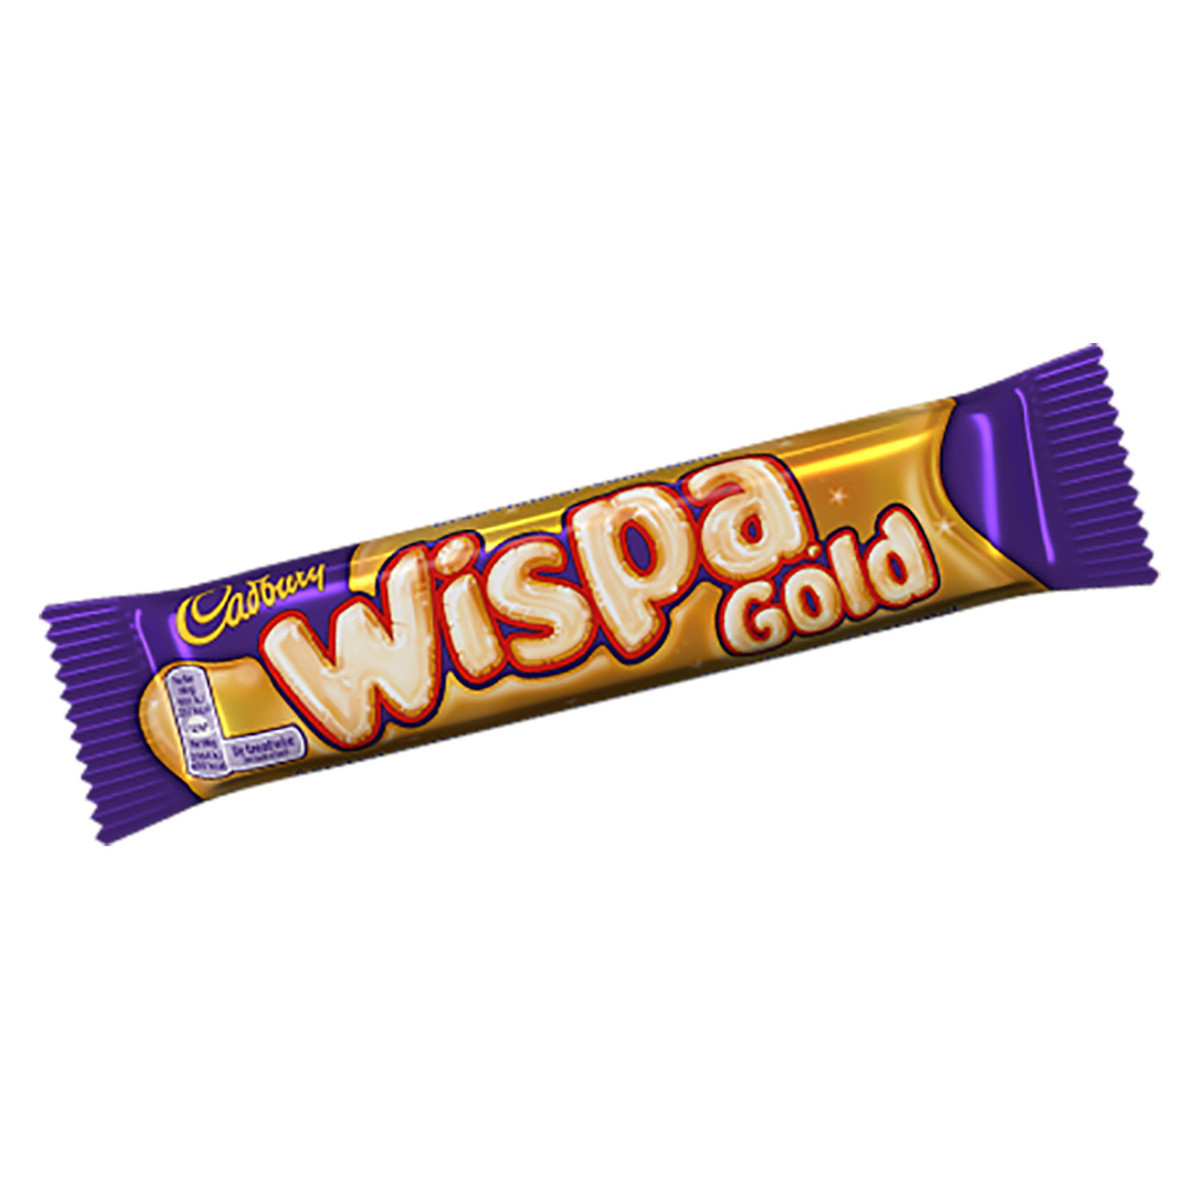 Cadbury's Wispa Gold